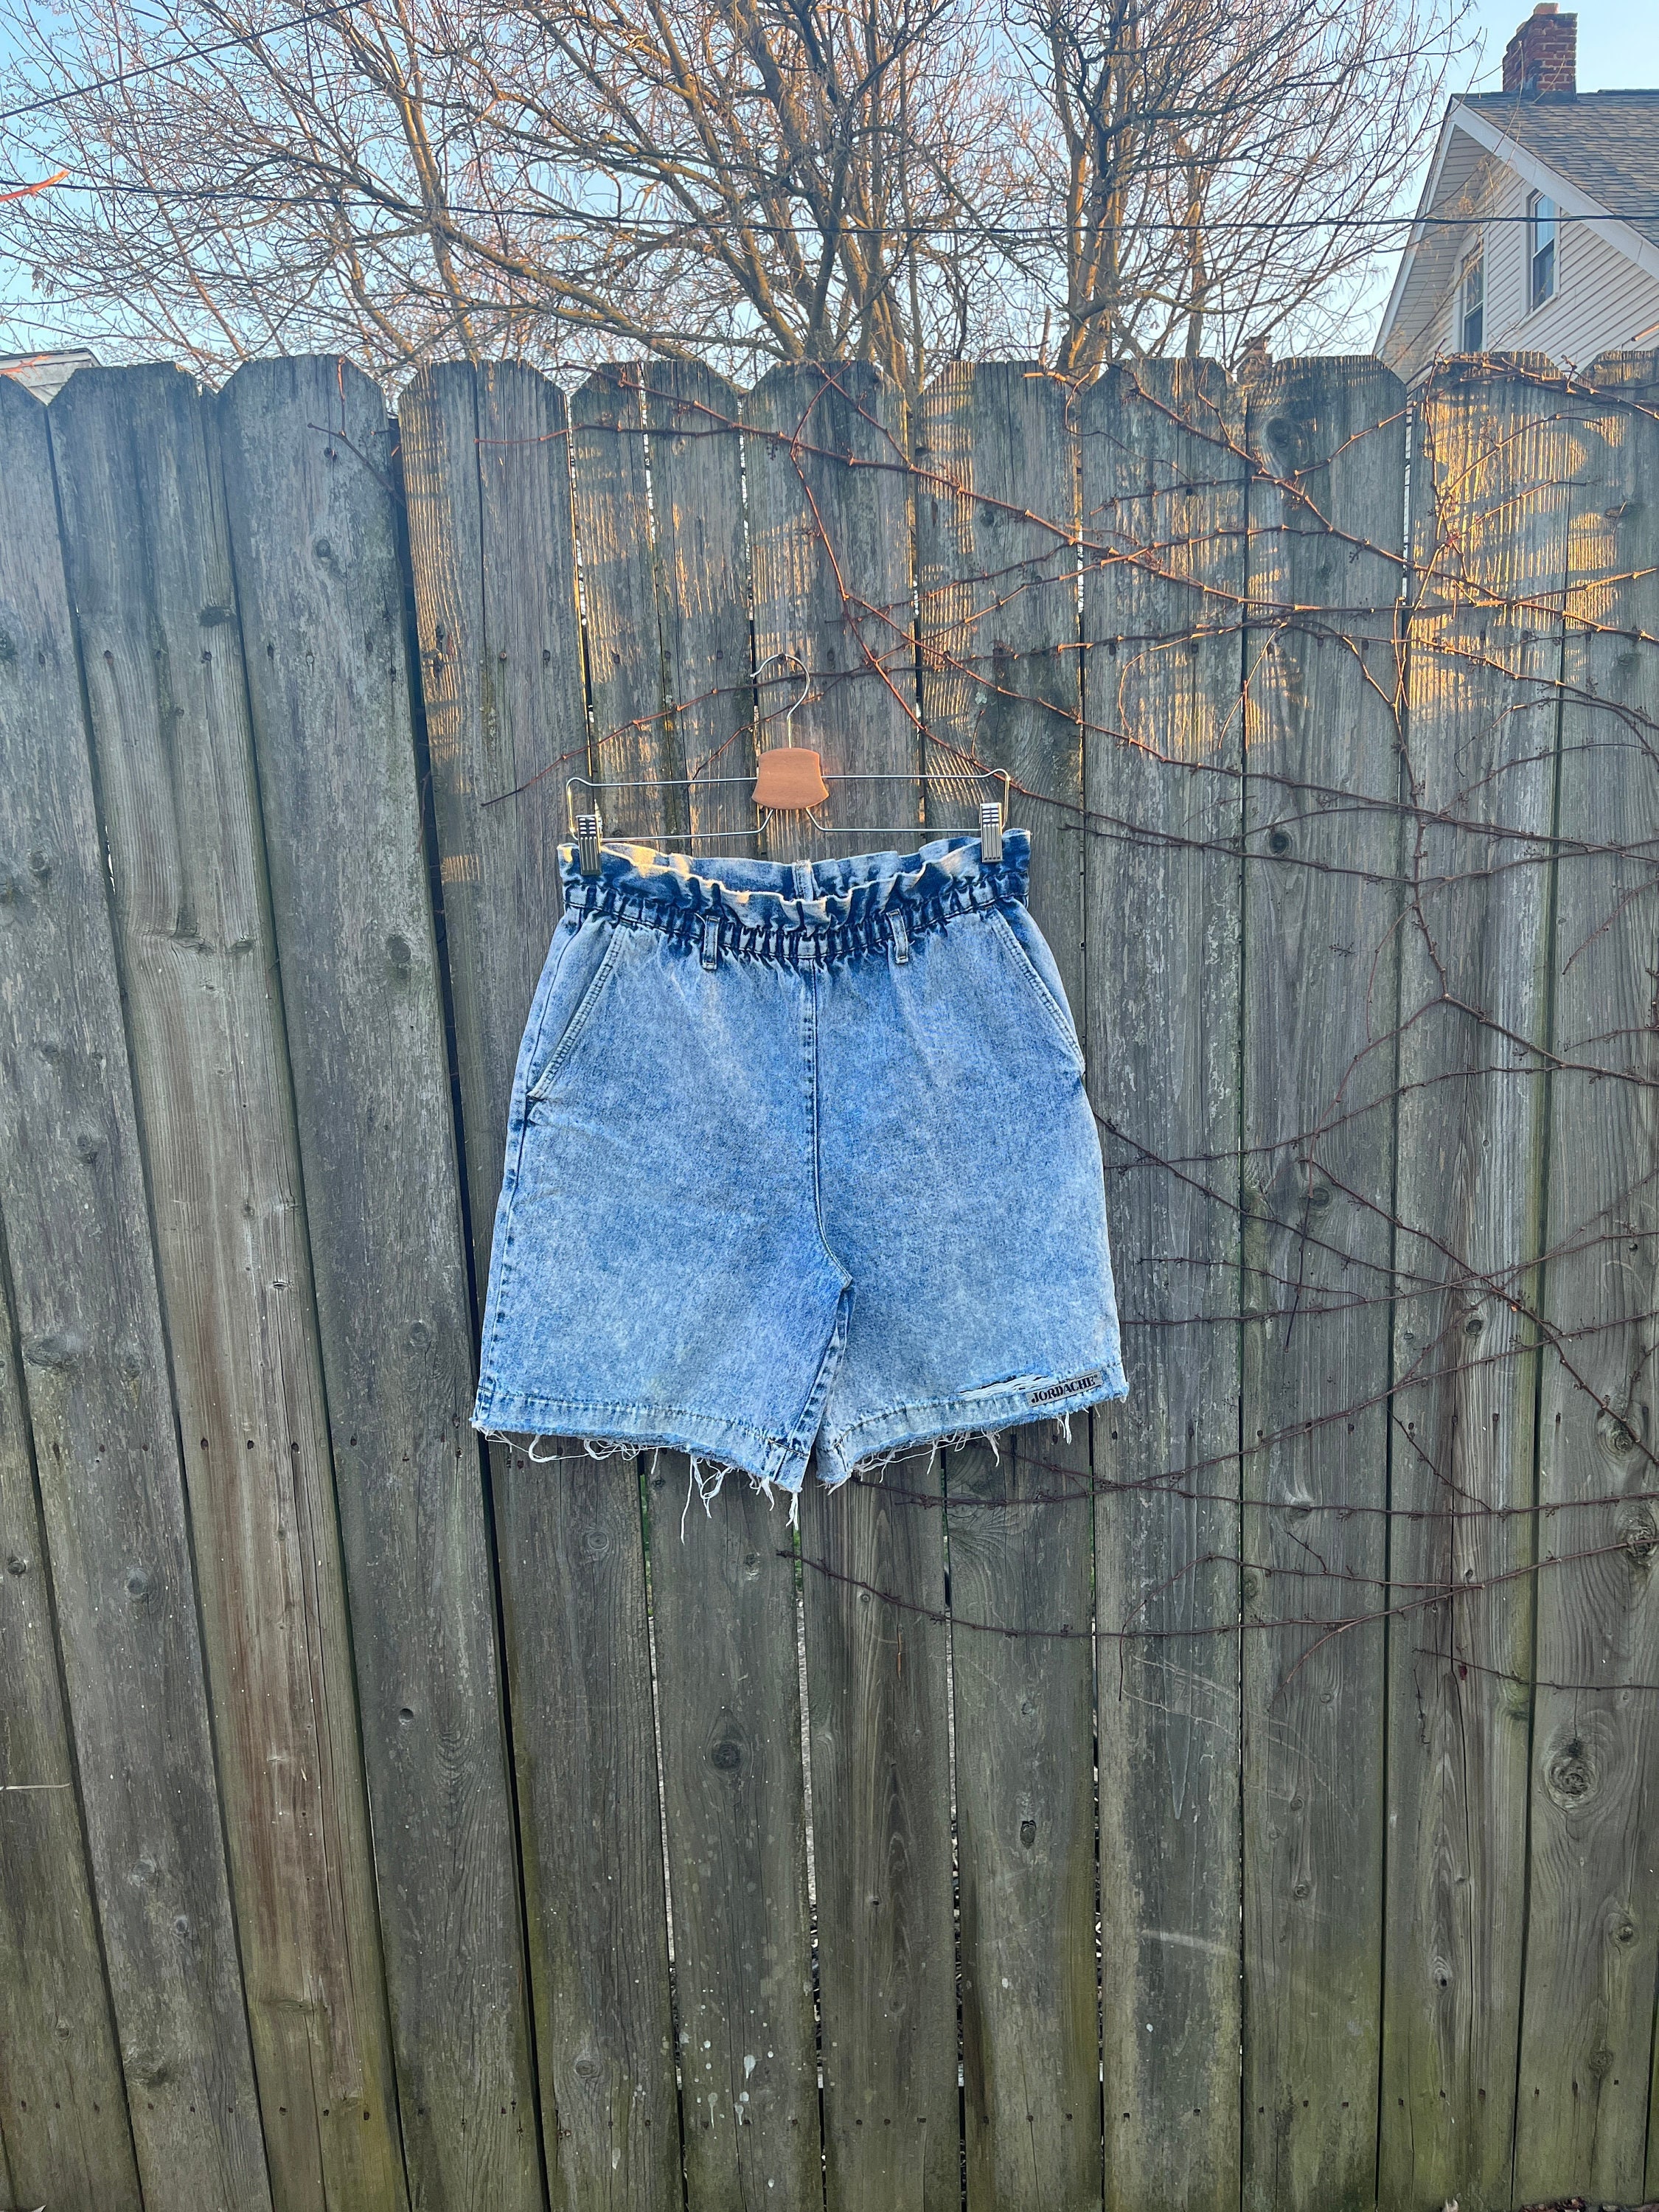 Restyled High Waist Jeans, Tie Dye Jean Butt Zip, Bleached Pattern,  Wearable Art, Unique Denim, Back Closure, Street Style, Size 34, XS-S 